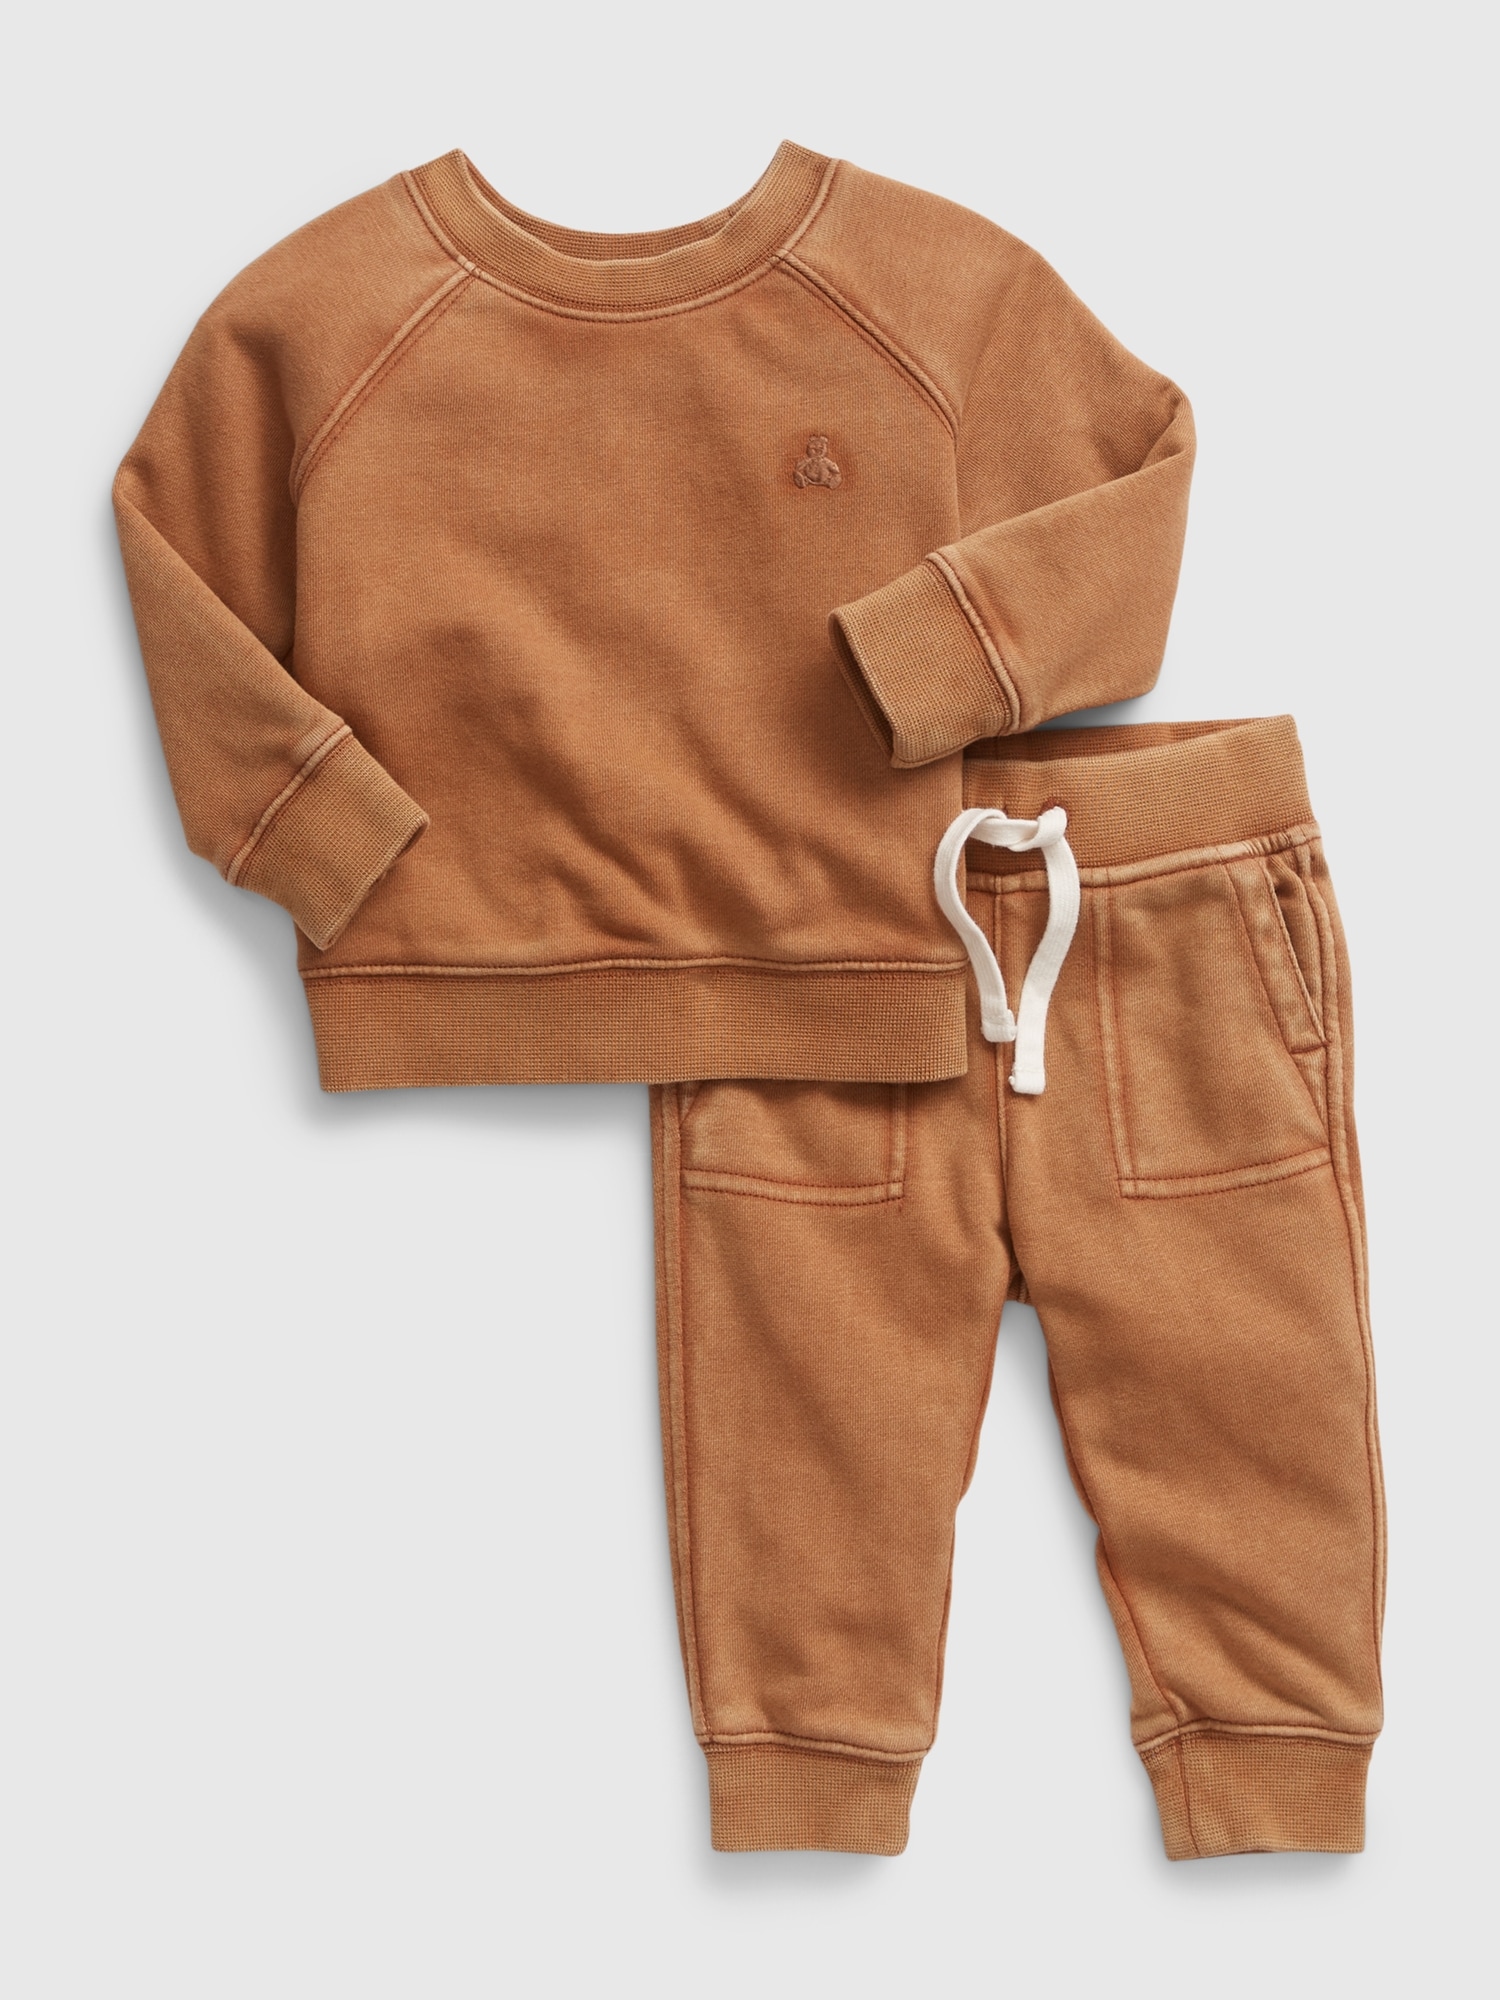 GAP Baby Outfit Set Sweatshirt And Sweatpants - Boys